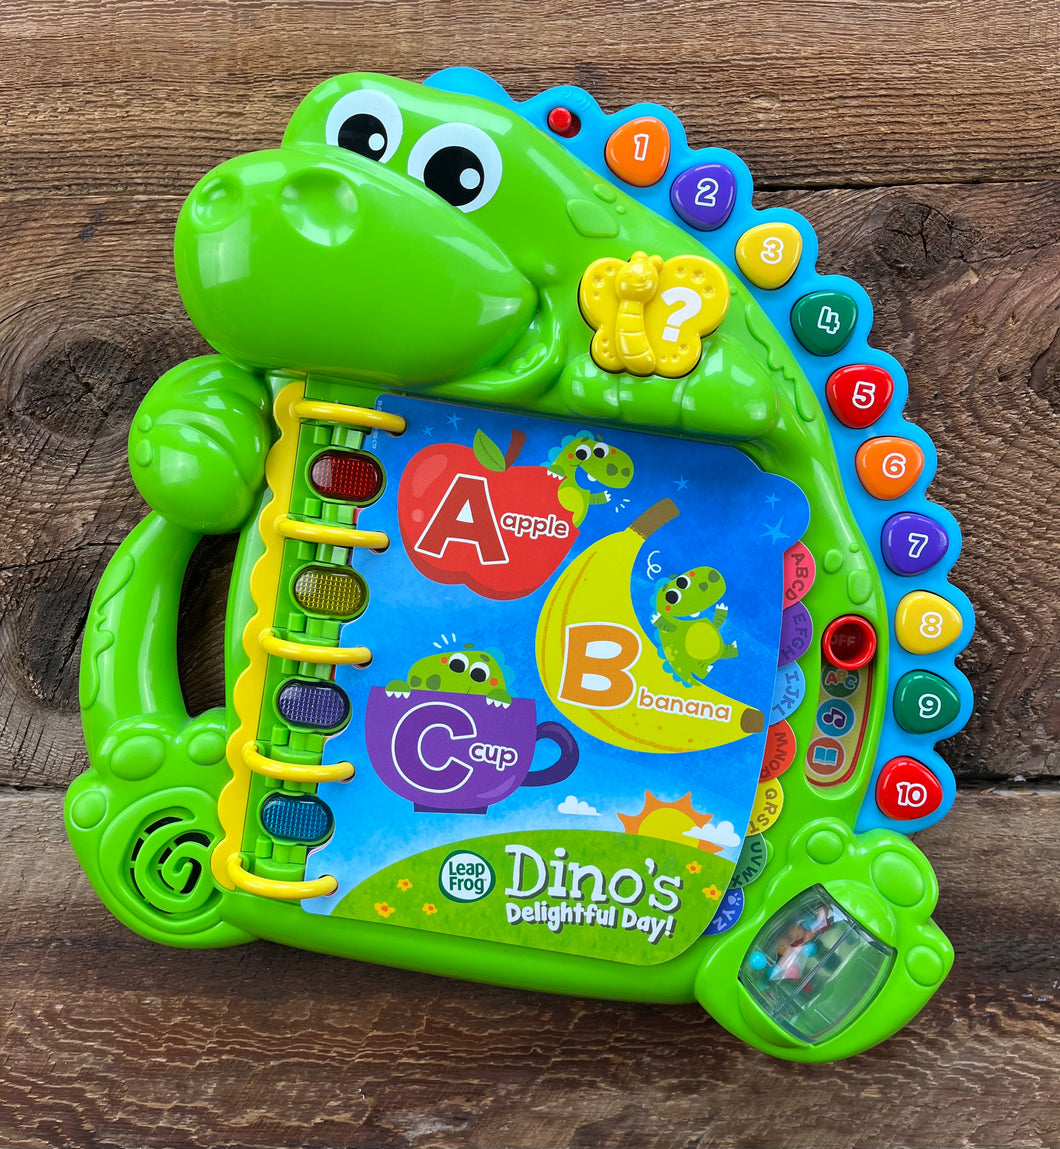 Leapfrog Dino’s Delightful Day Playbook